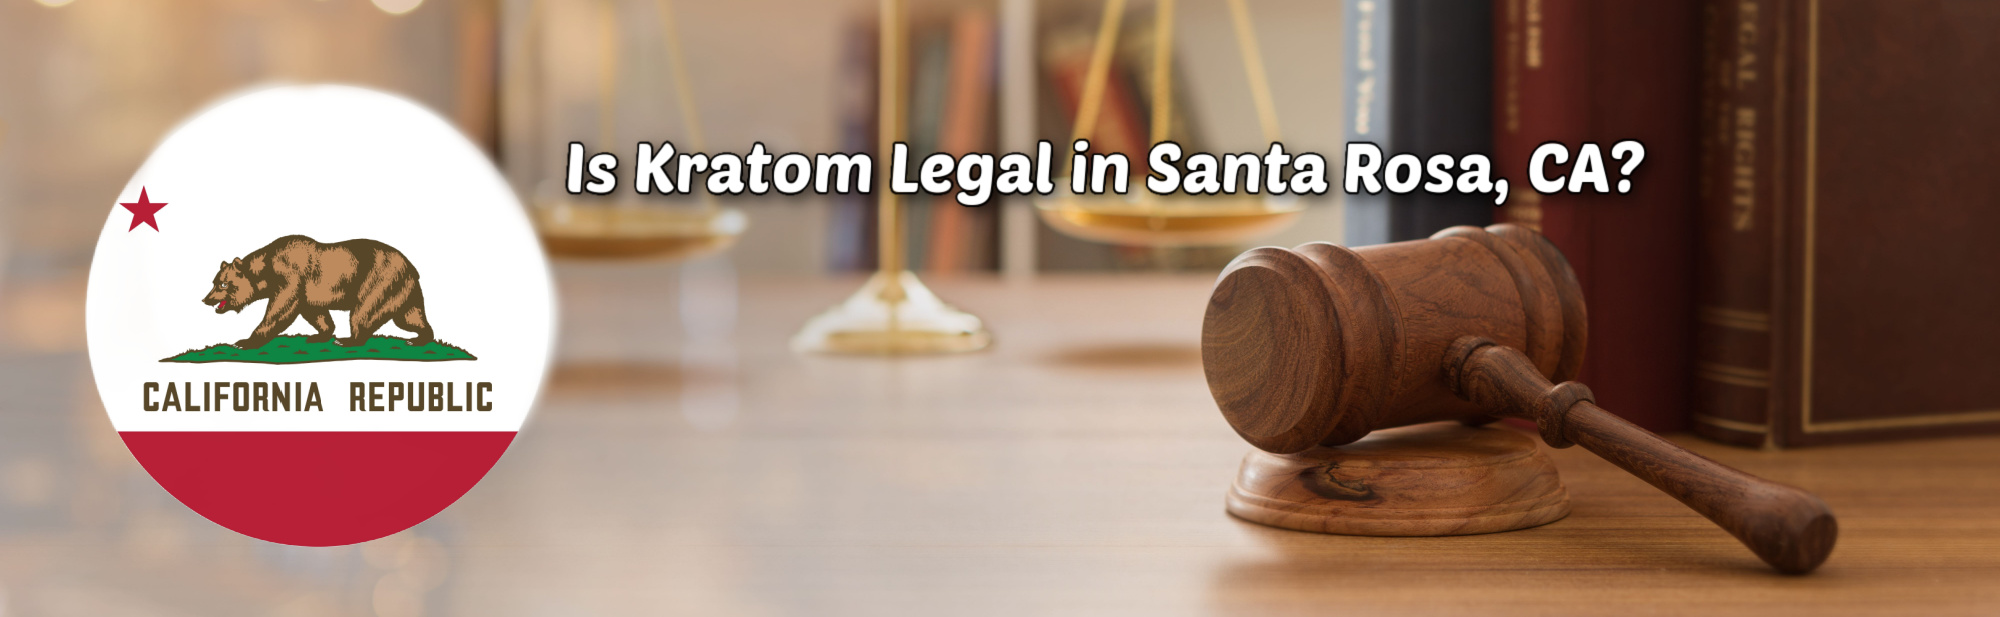 image of is kratom legal in santa rosa ca